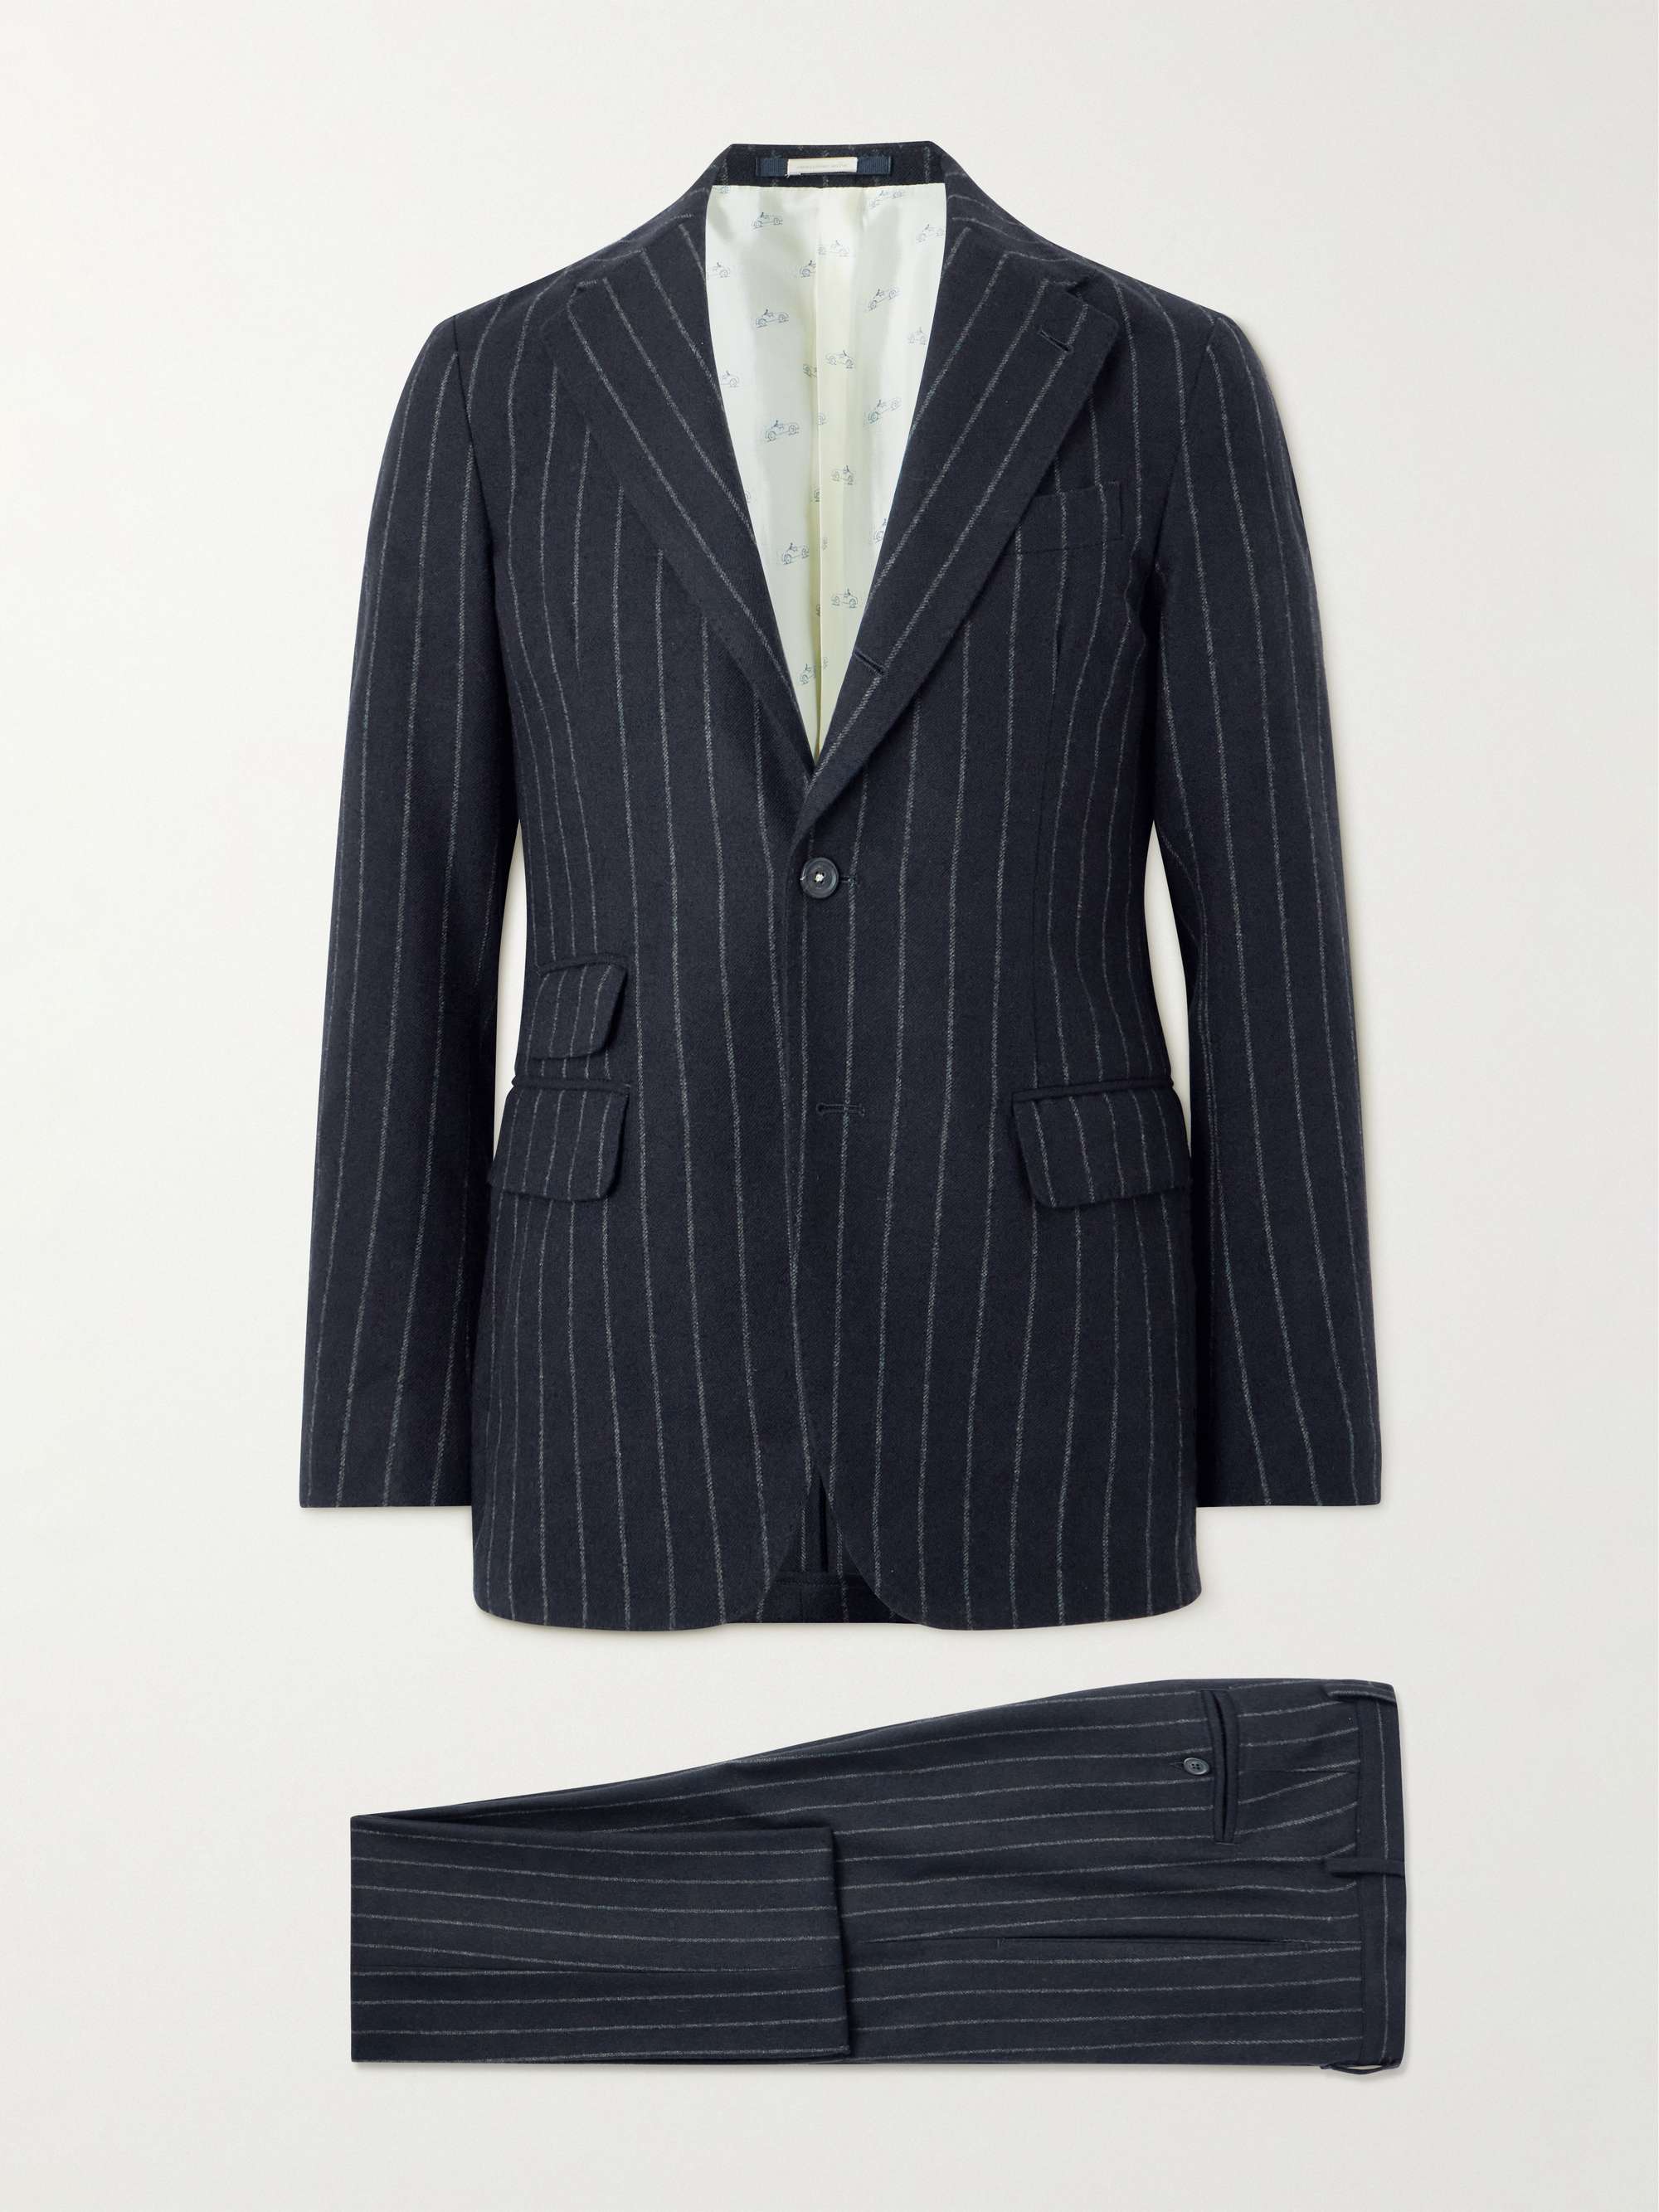 MASSIMO ALBA Sloop Pinstriped Wool Suit for Men | MR PORTER